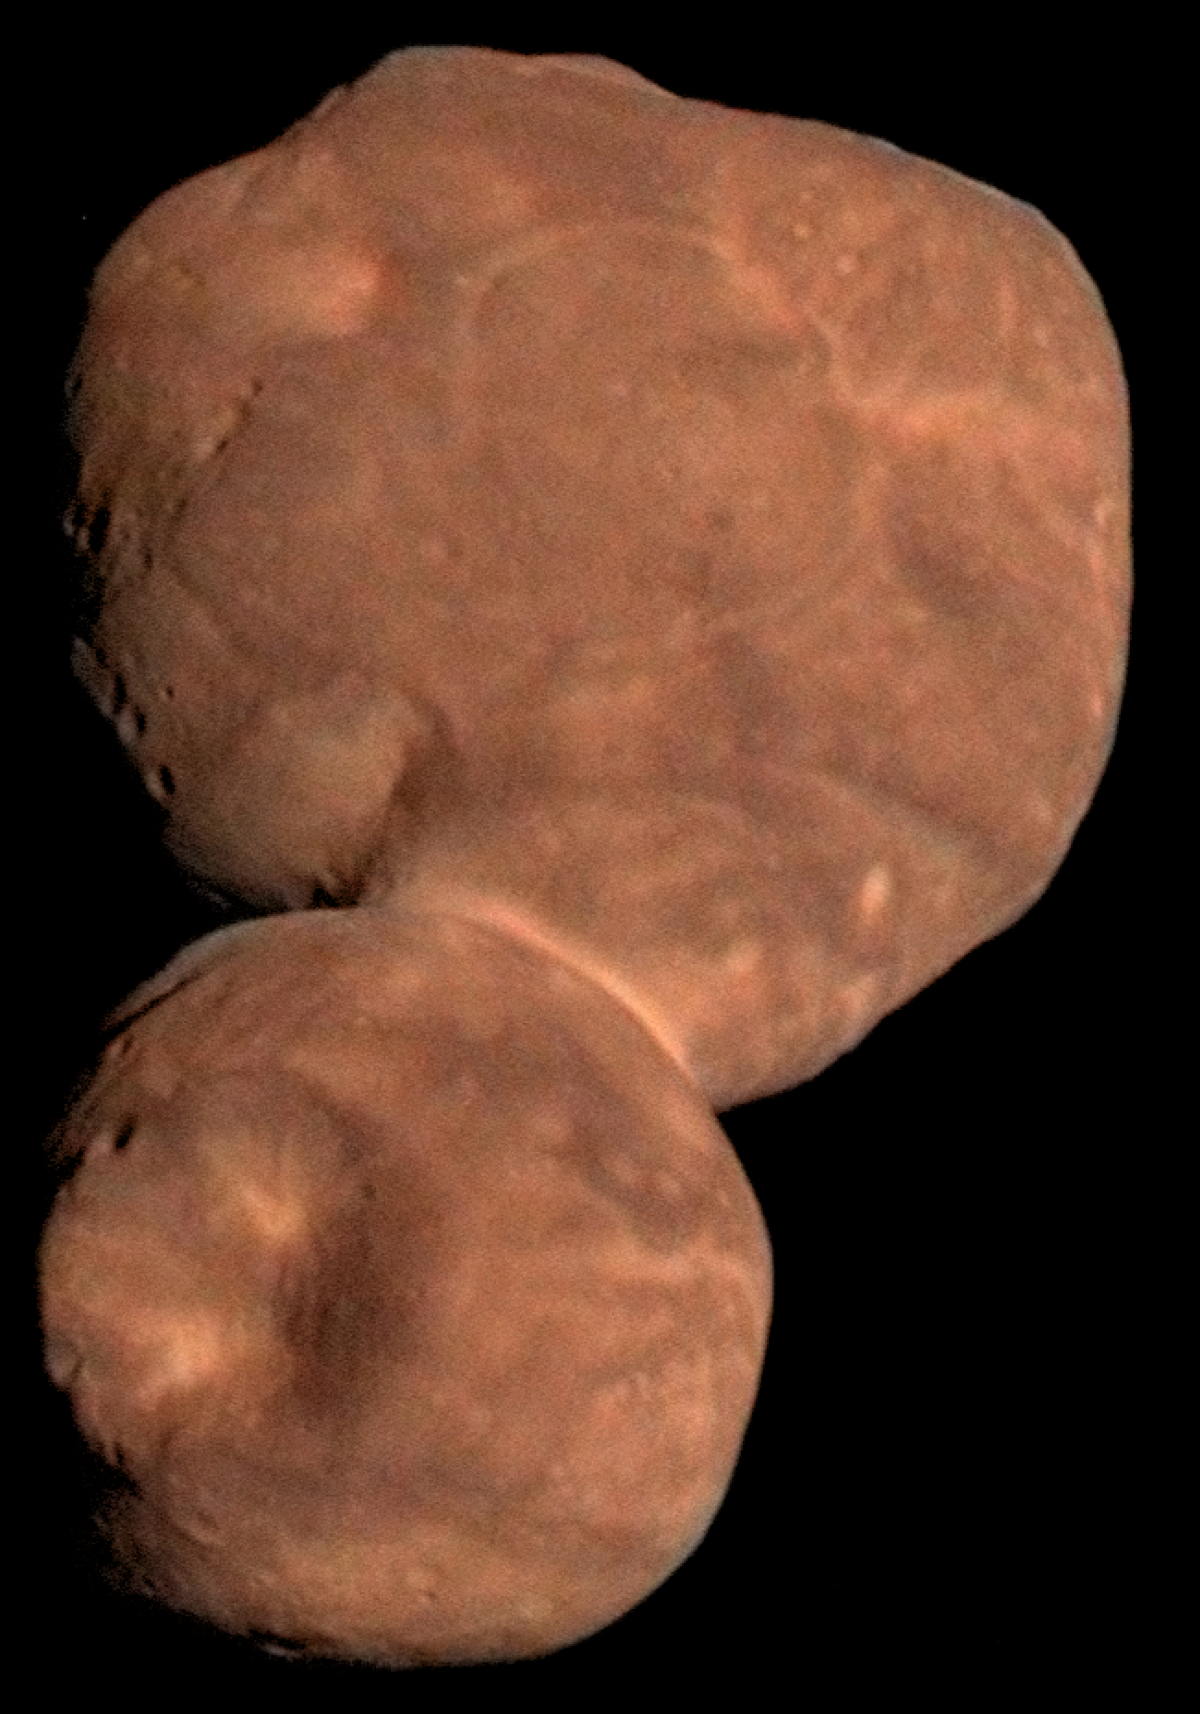 486958 Arrokoth[b] (provisional designation 2014 MU69 ; formerly nicknamed Ultima Thule[c]) is a trans-Neptunian object located i